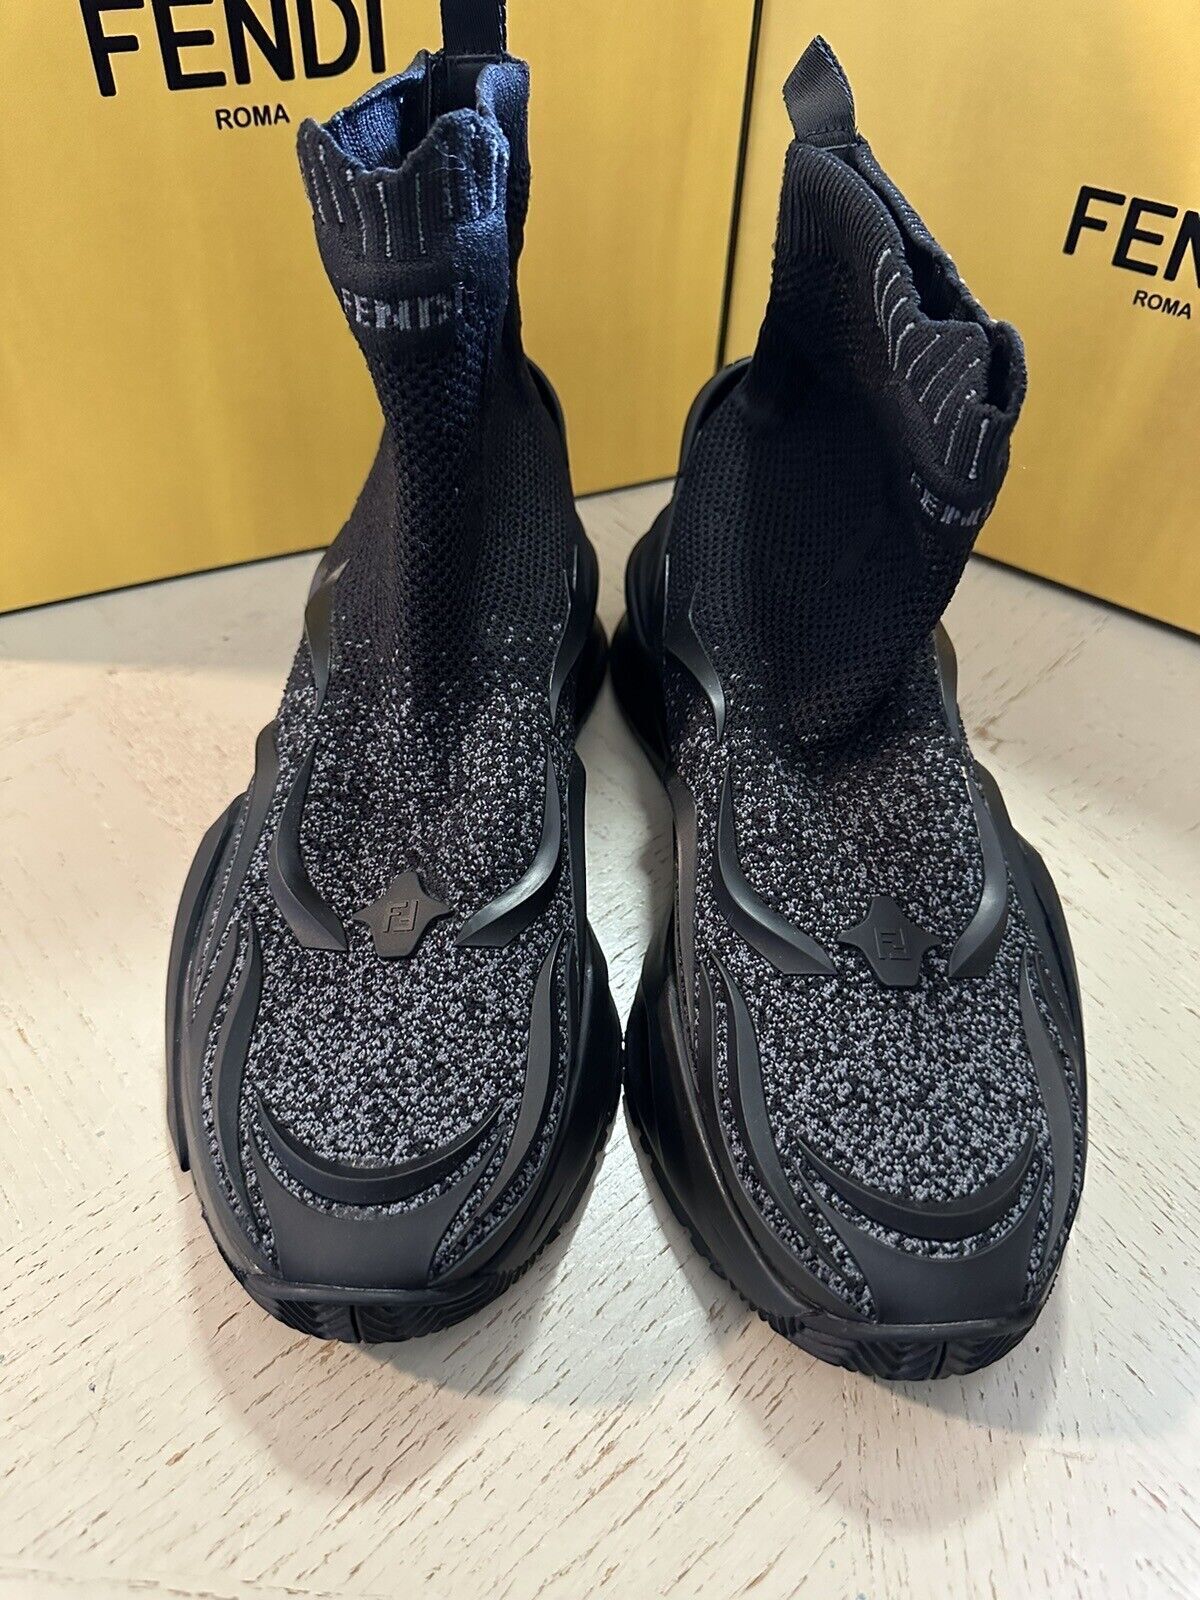 NIB $1190 Fendi Contrast Knit High Top Sock Sneakers Shoes Black 13 US 7E1554